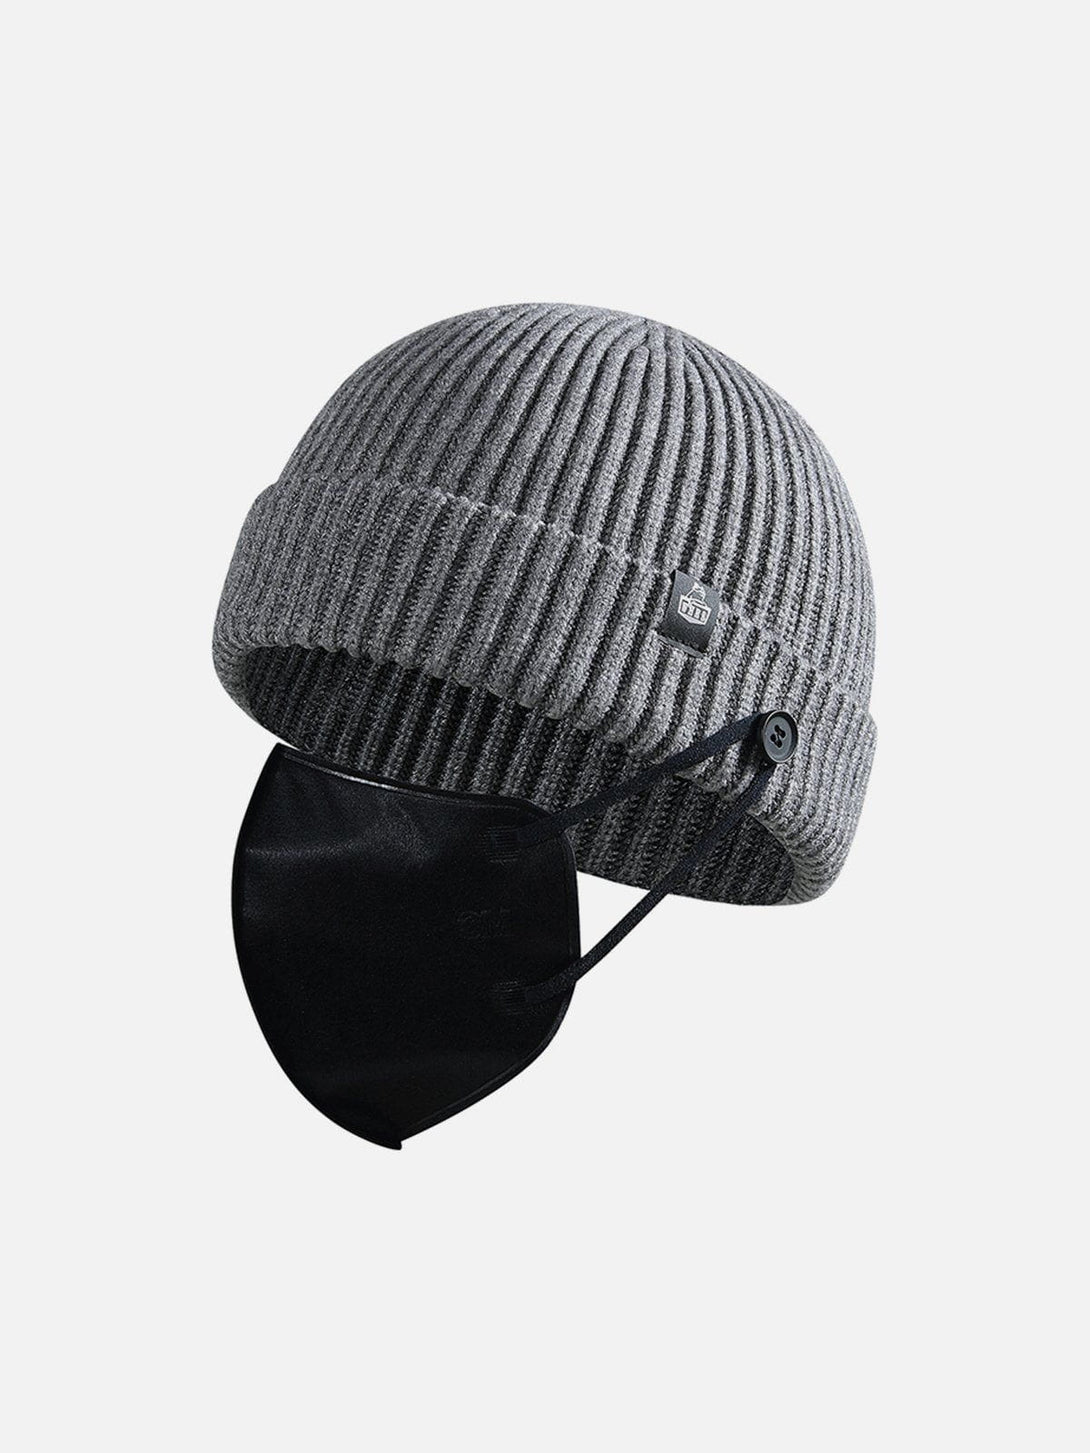 Majesda® - Buttons Knit Dome Hat- Outfit Ideas - Streetwear Fashion - majesda.com